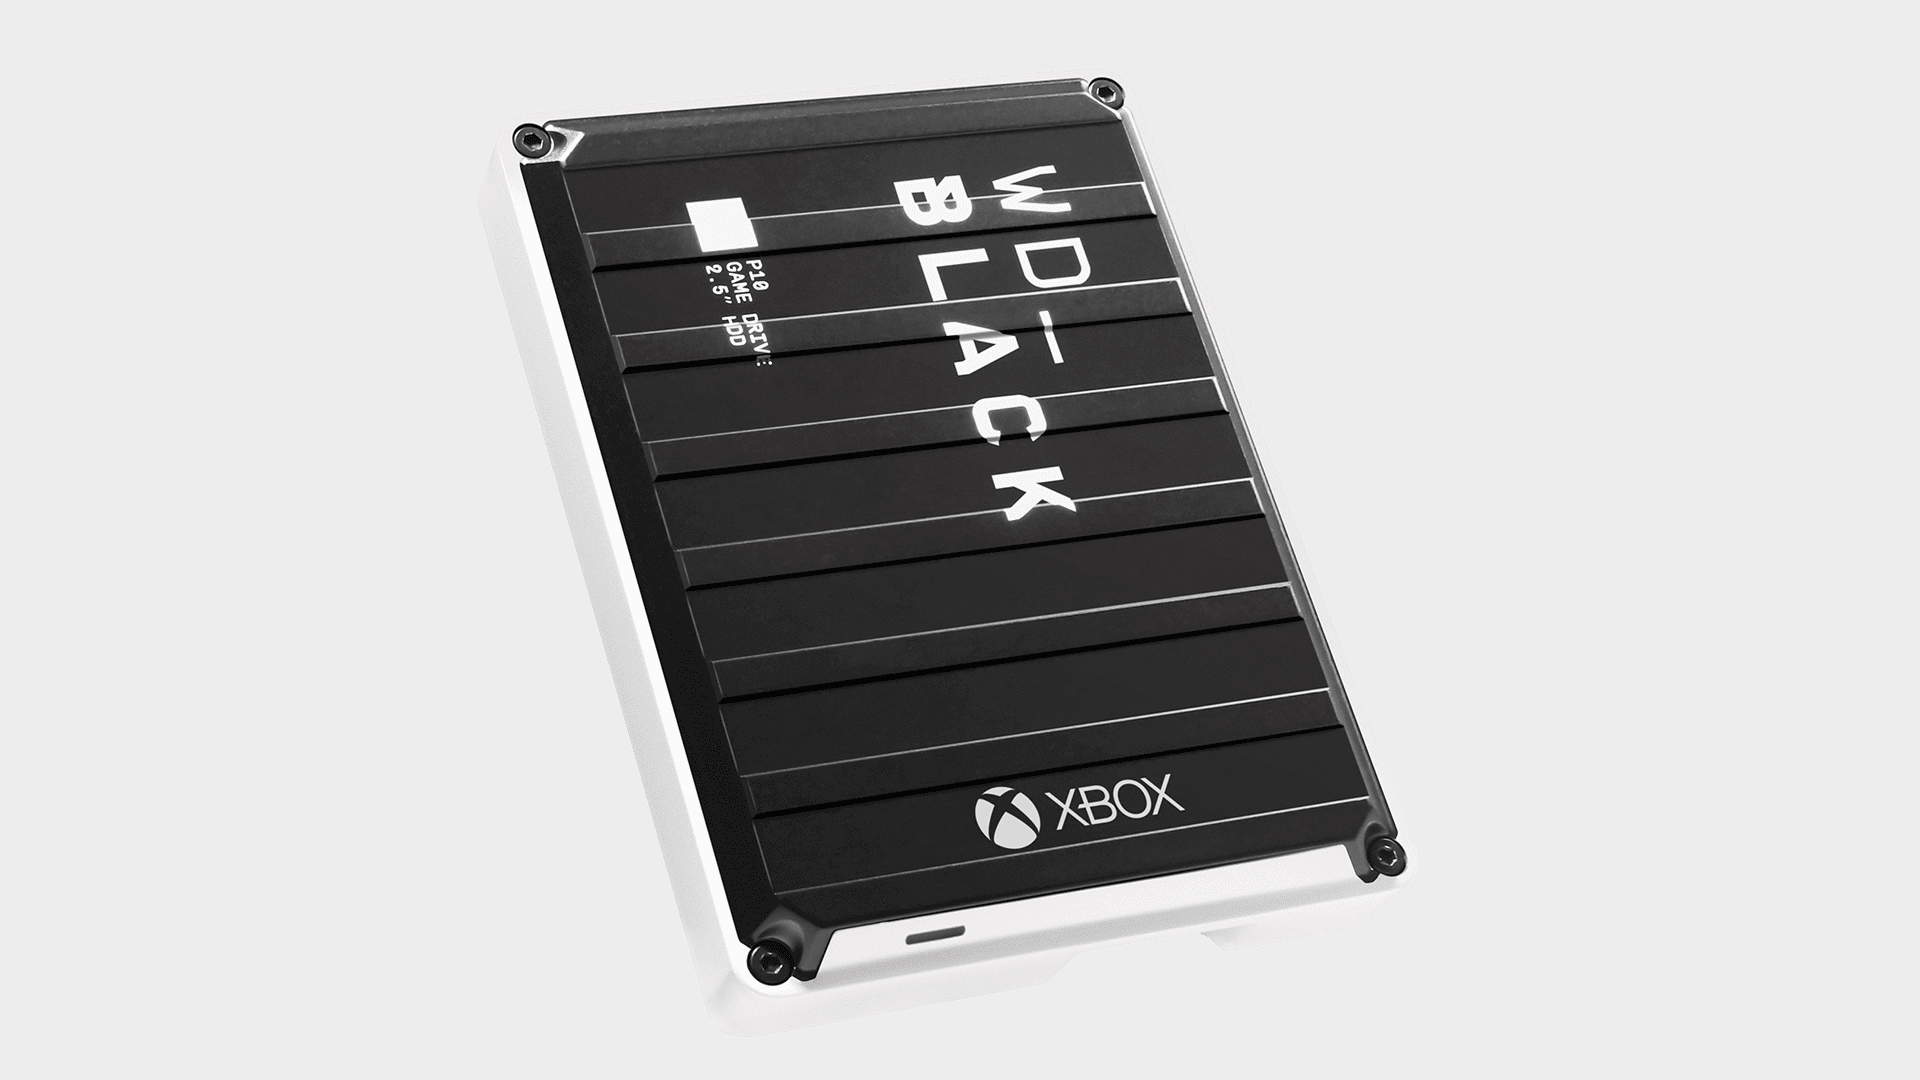 best xbox series x external hard drives: WD Black P10